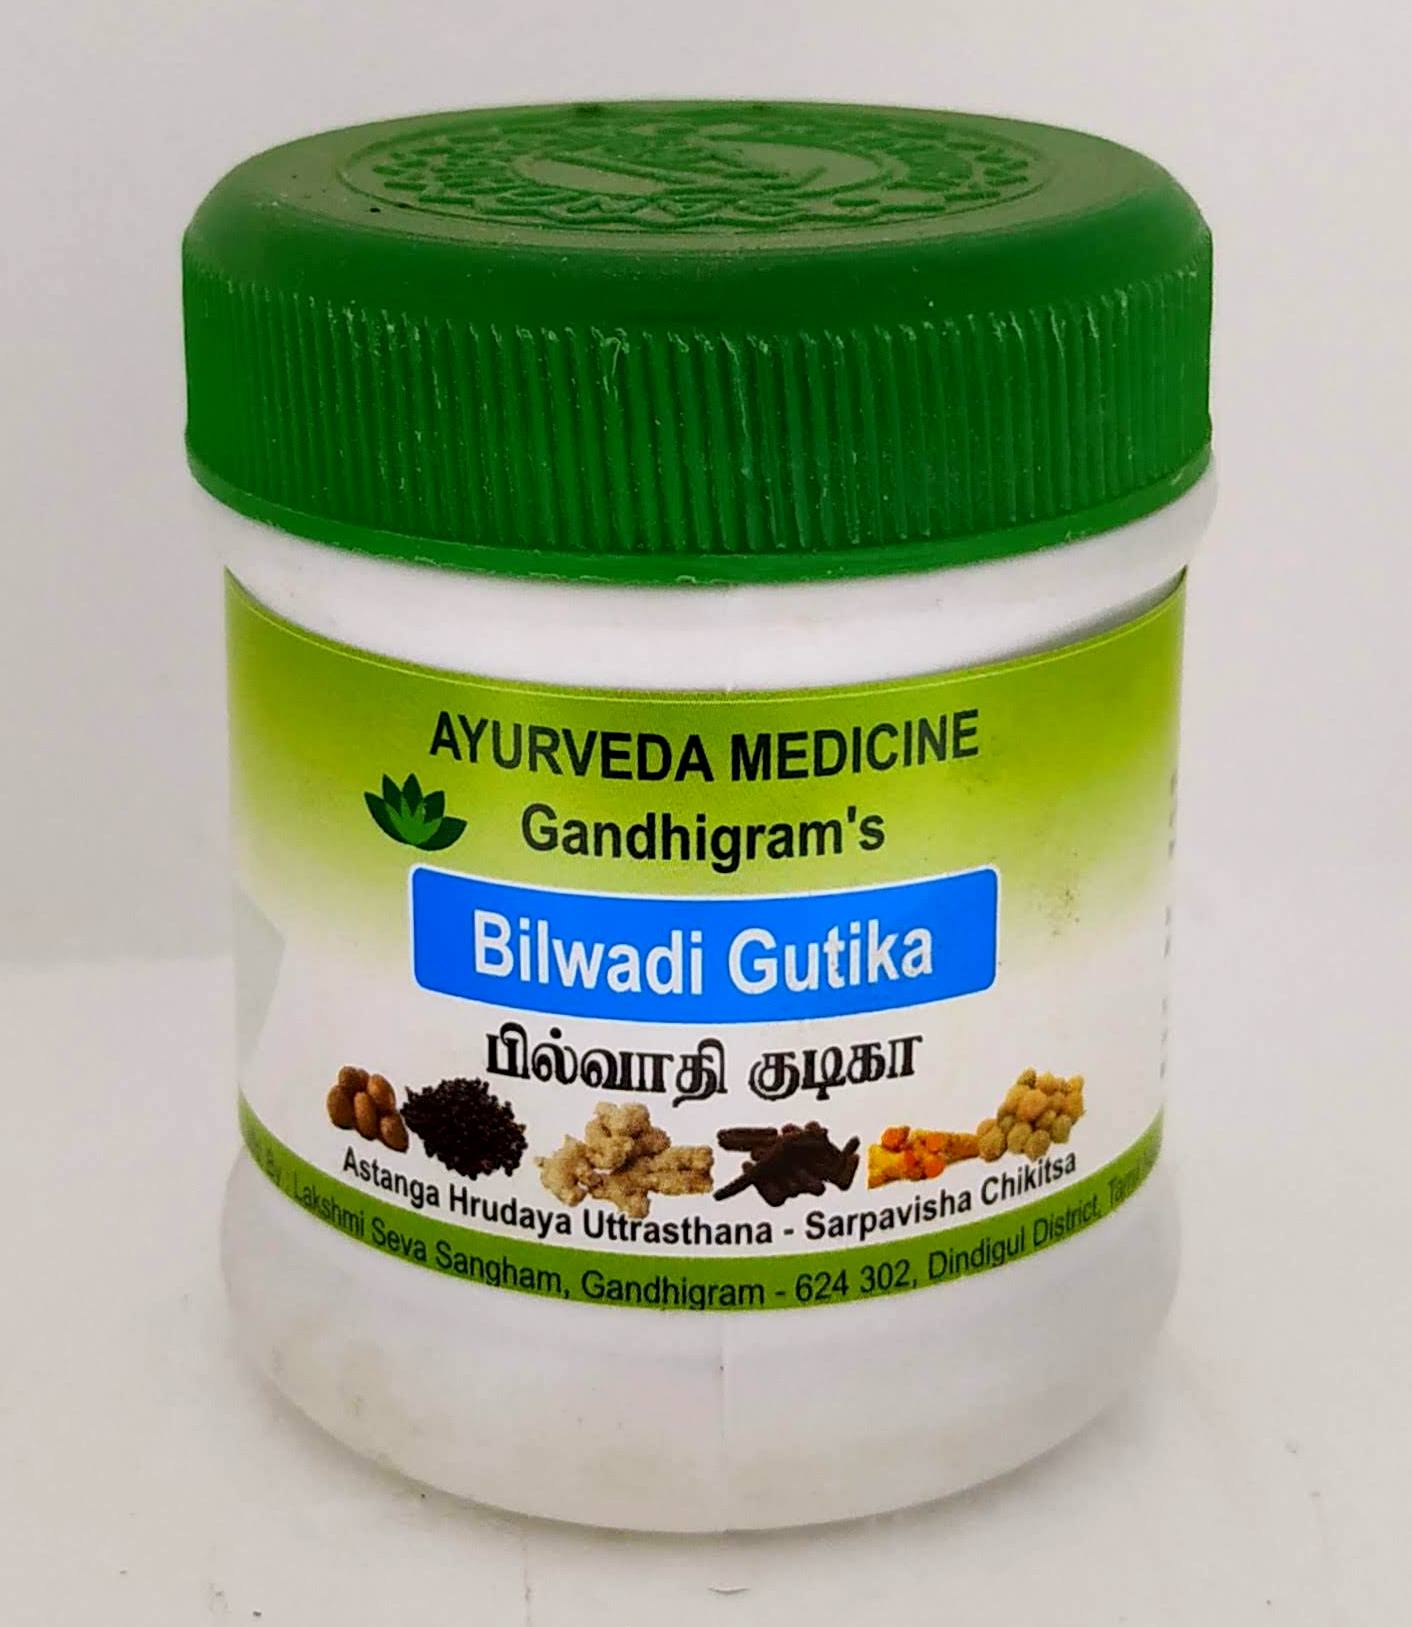 Shop Bilwadi Gutika Tablets - 50gm at price 112.00 from Lakshmi Seva Sangham Online - Ayush Care